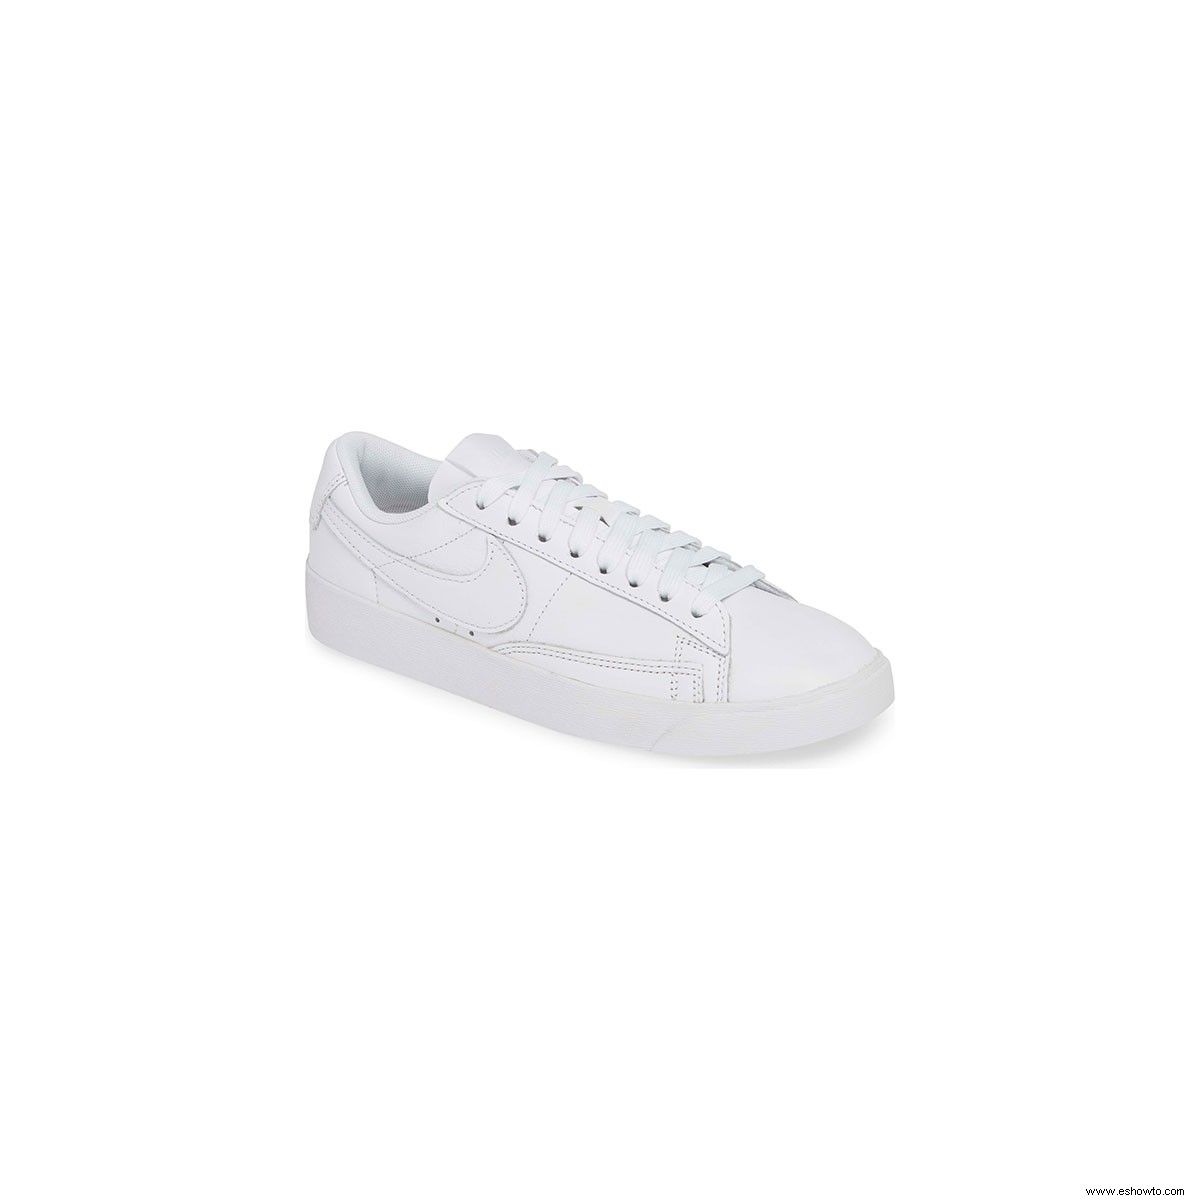 7 elegantes zapatillas blancas que querrás usar con todo 